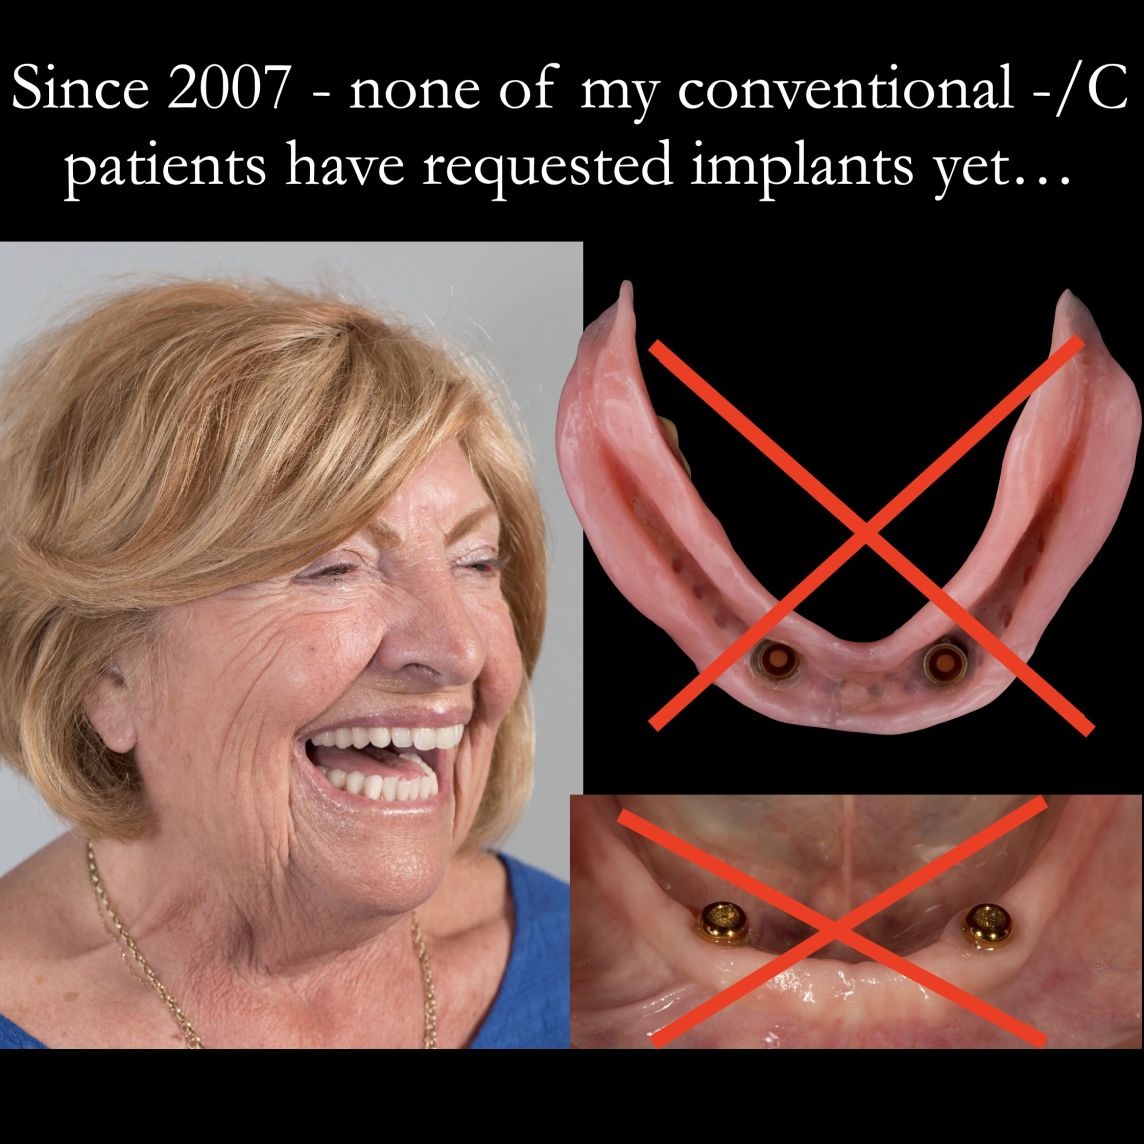 Do my complete denture patients need implants?